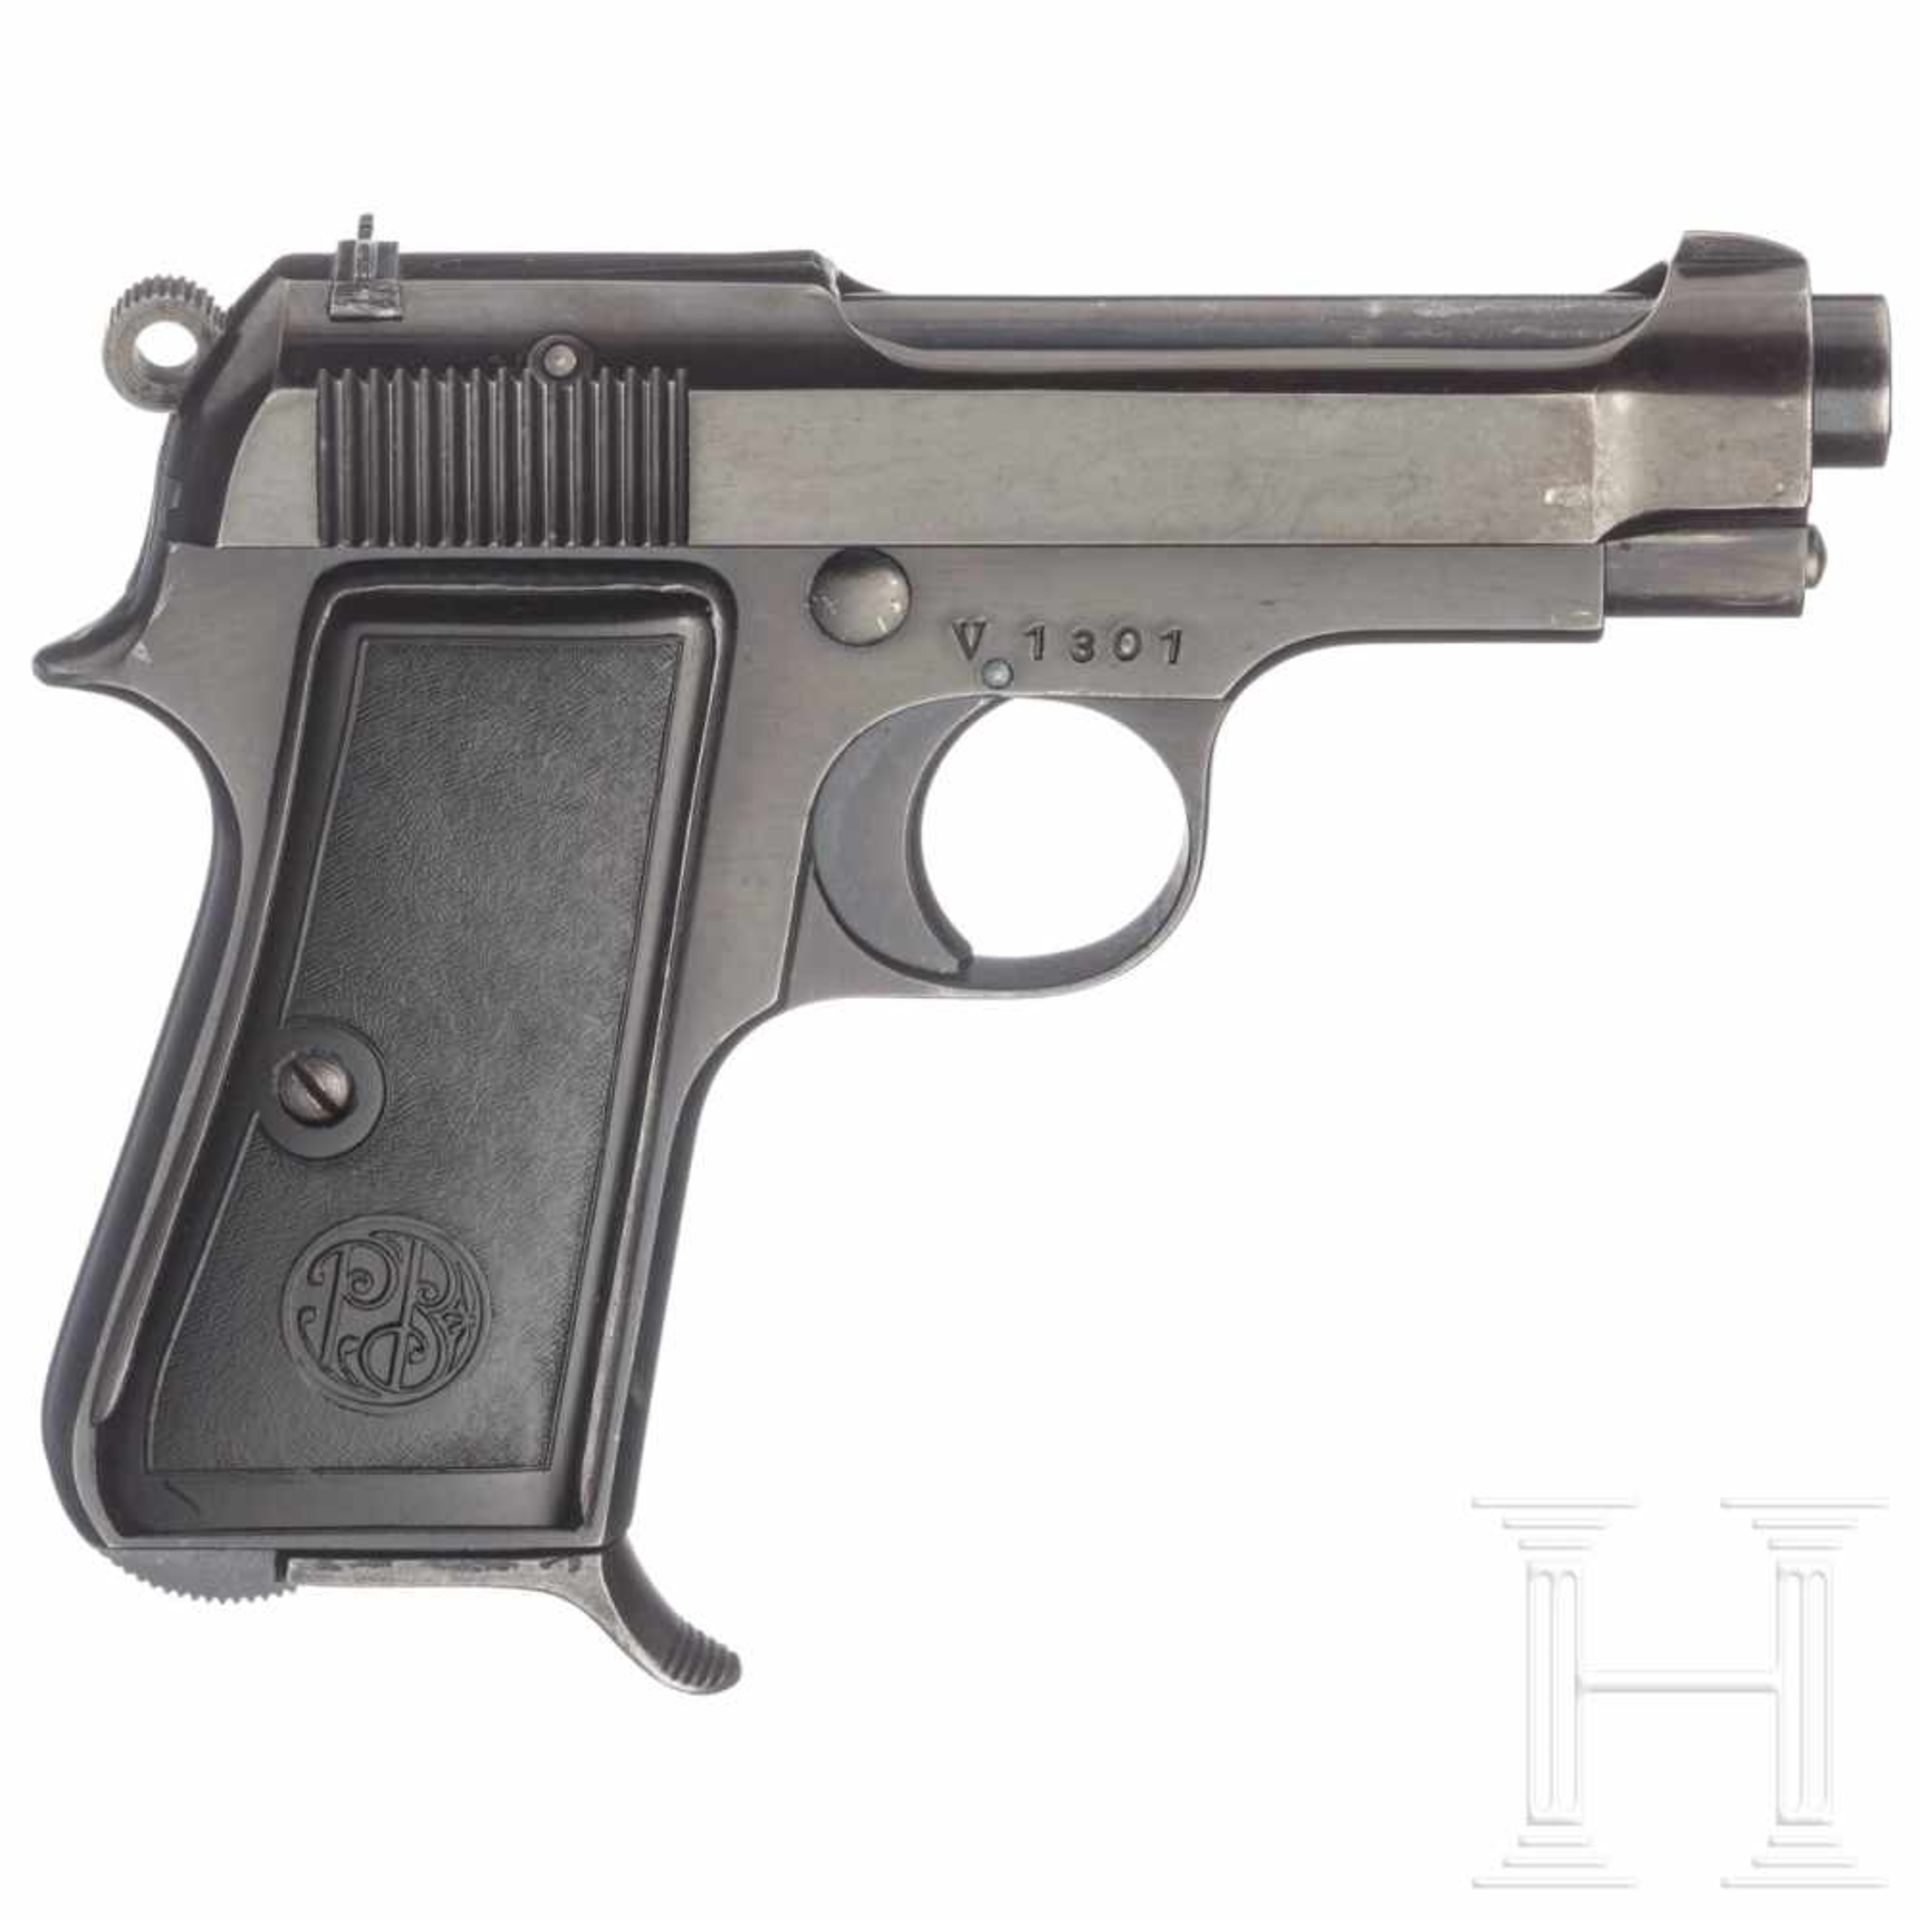 Beretta Mod. 34, unbekannte AusführungKal. 9 mm Brown. kurz, Nr. V 1301, Seriennummer nur rechts - Bild 2 aus 2